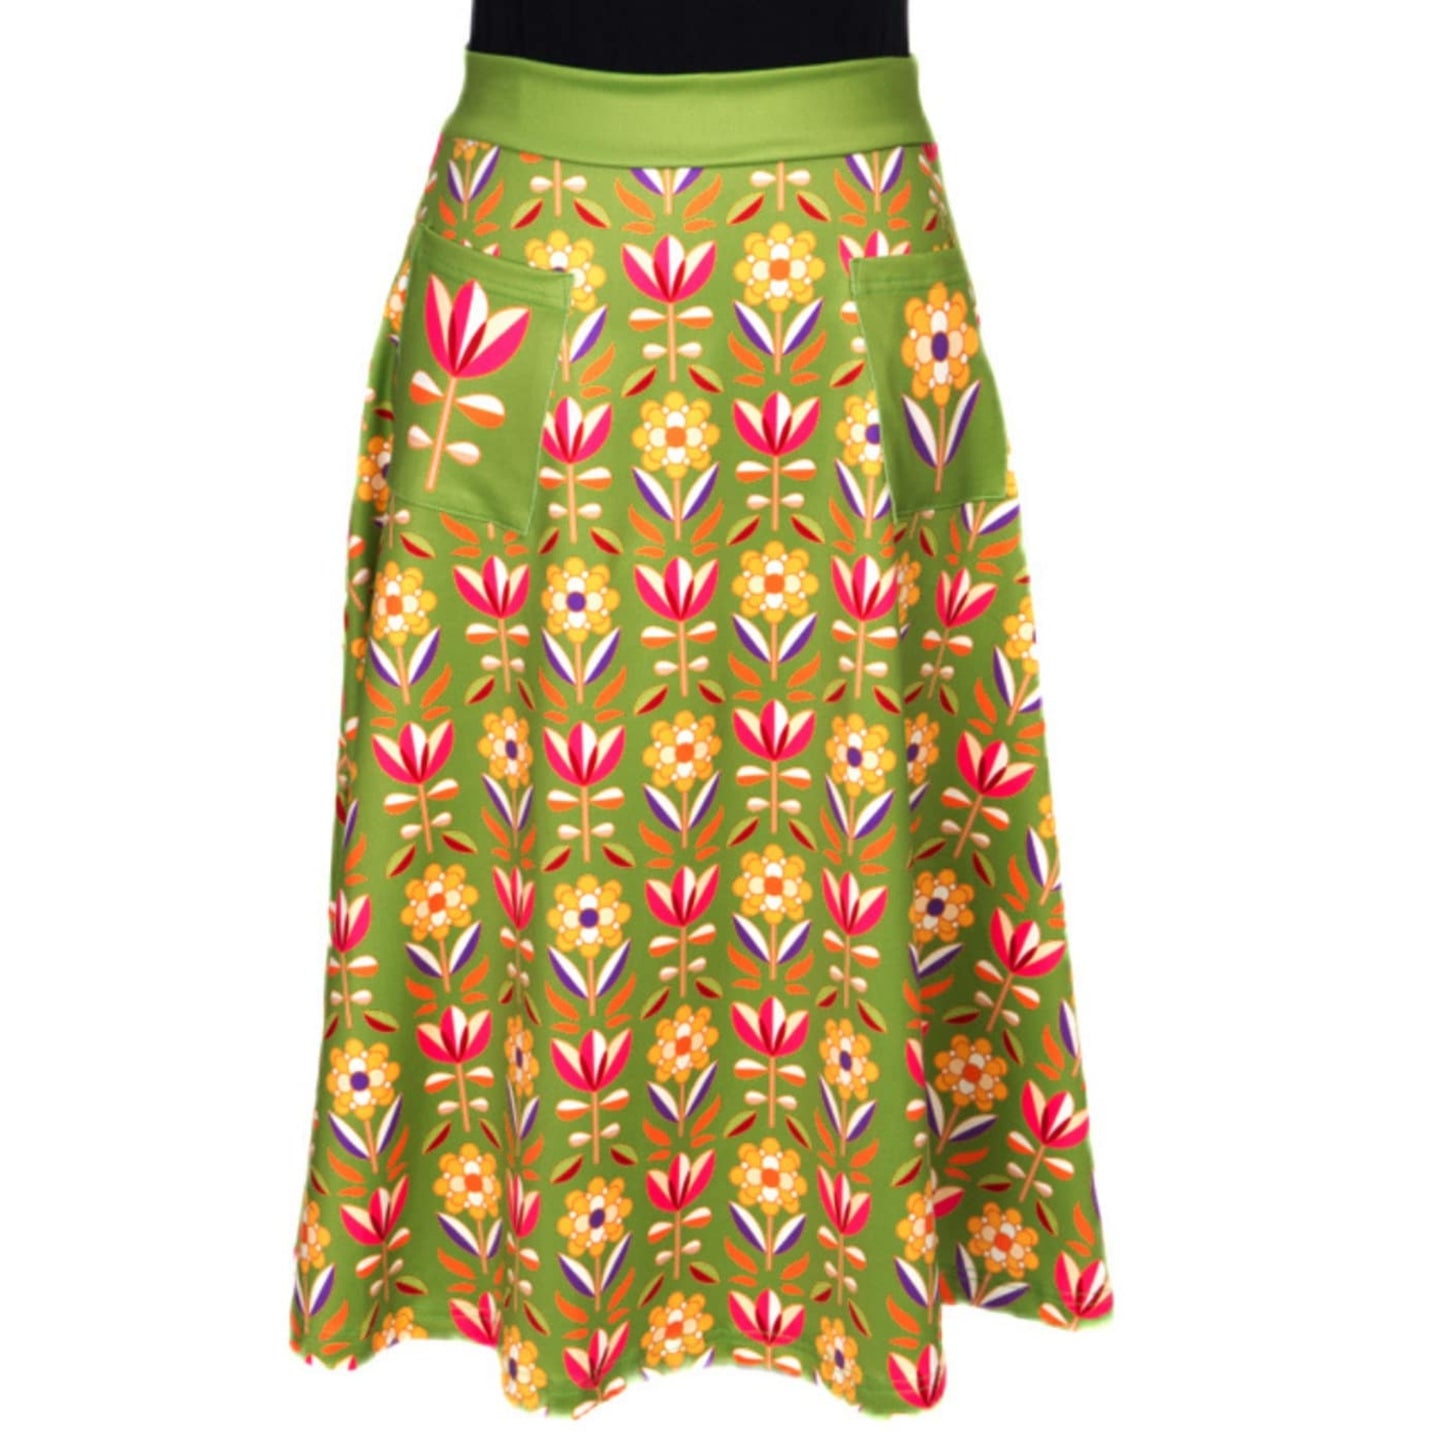 Retro Flower Original Skirt by RainbowsAndFairies.com.au (Retro Floral - 70s Wallpaper - Tulip - Kitsch - Aline Skirt With Pockets - Vintage Inspired) - SKU: CL_OSKRT_RETFL_ORG - Pic-02